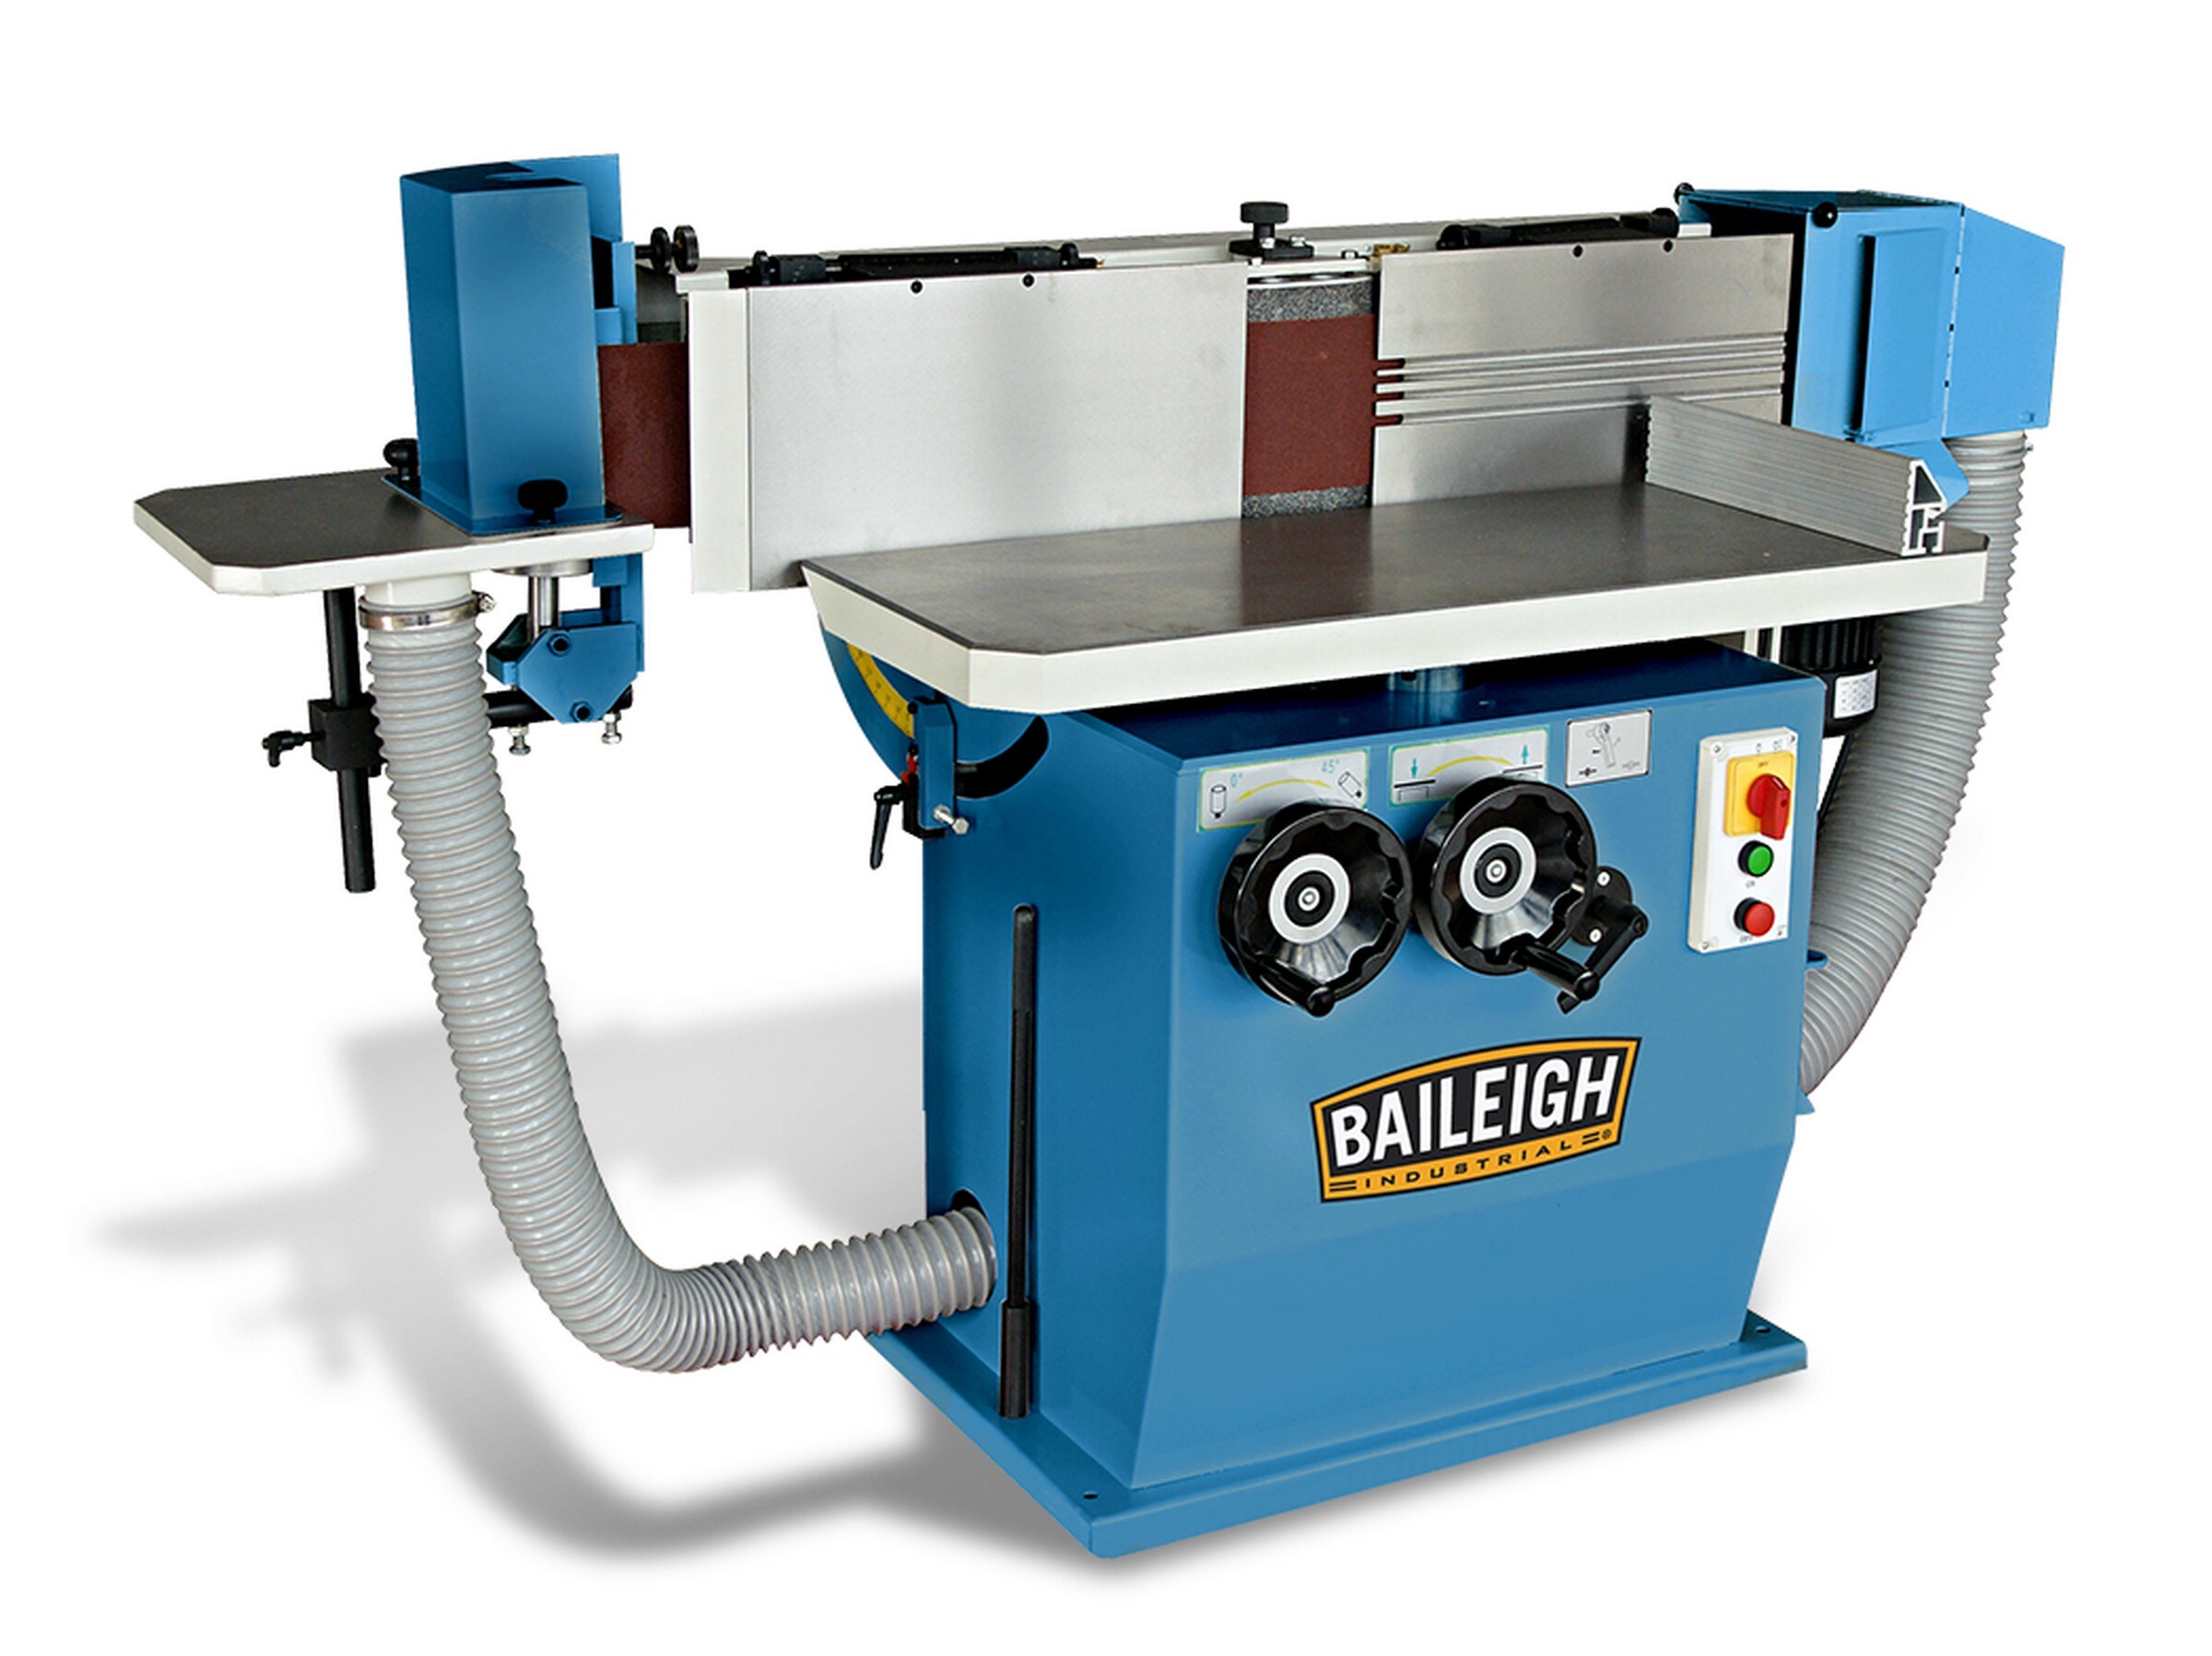 Baileigh 220-Volt 2 Corded Belt Sander with Dust Management | - Baileigh Industrial 1004163